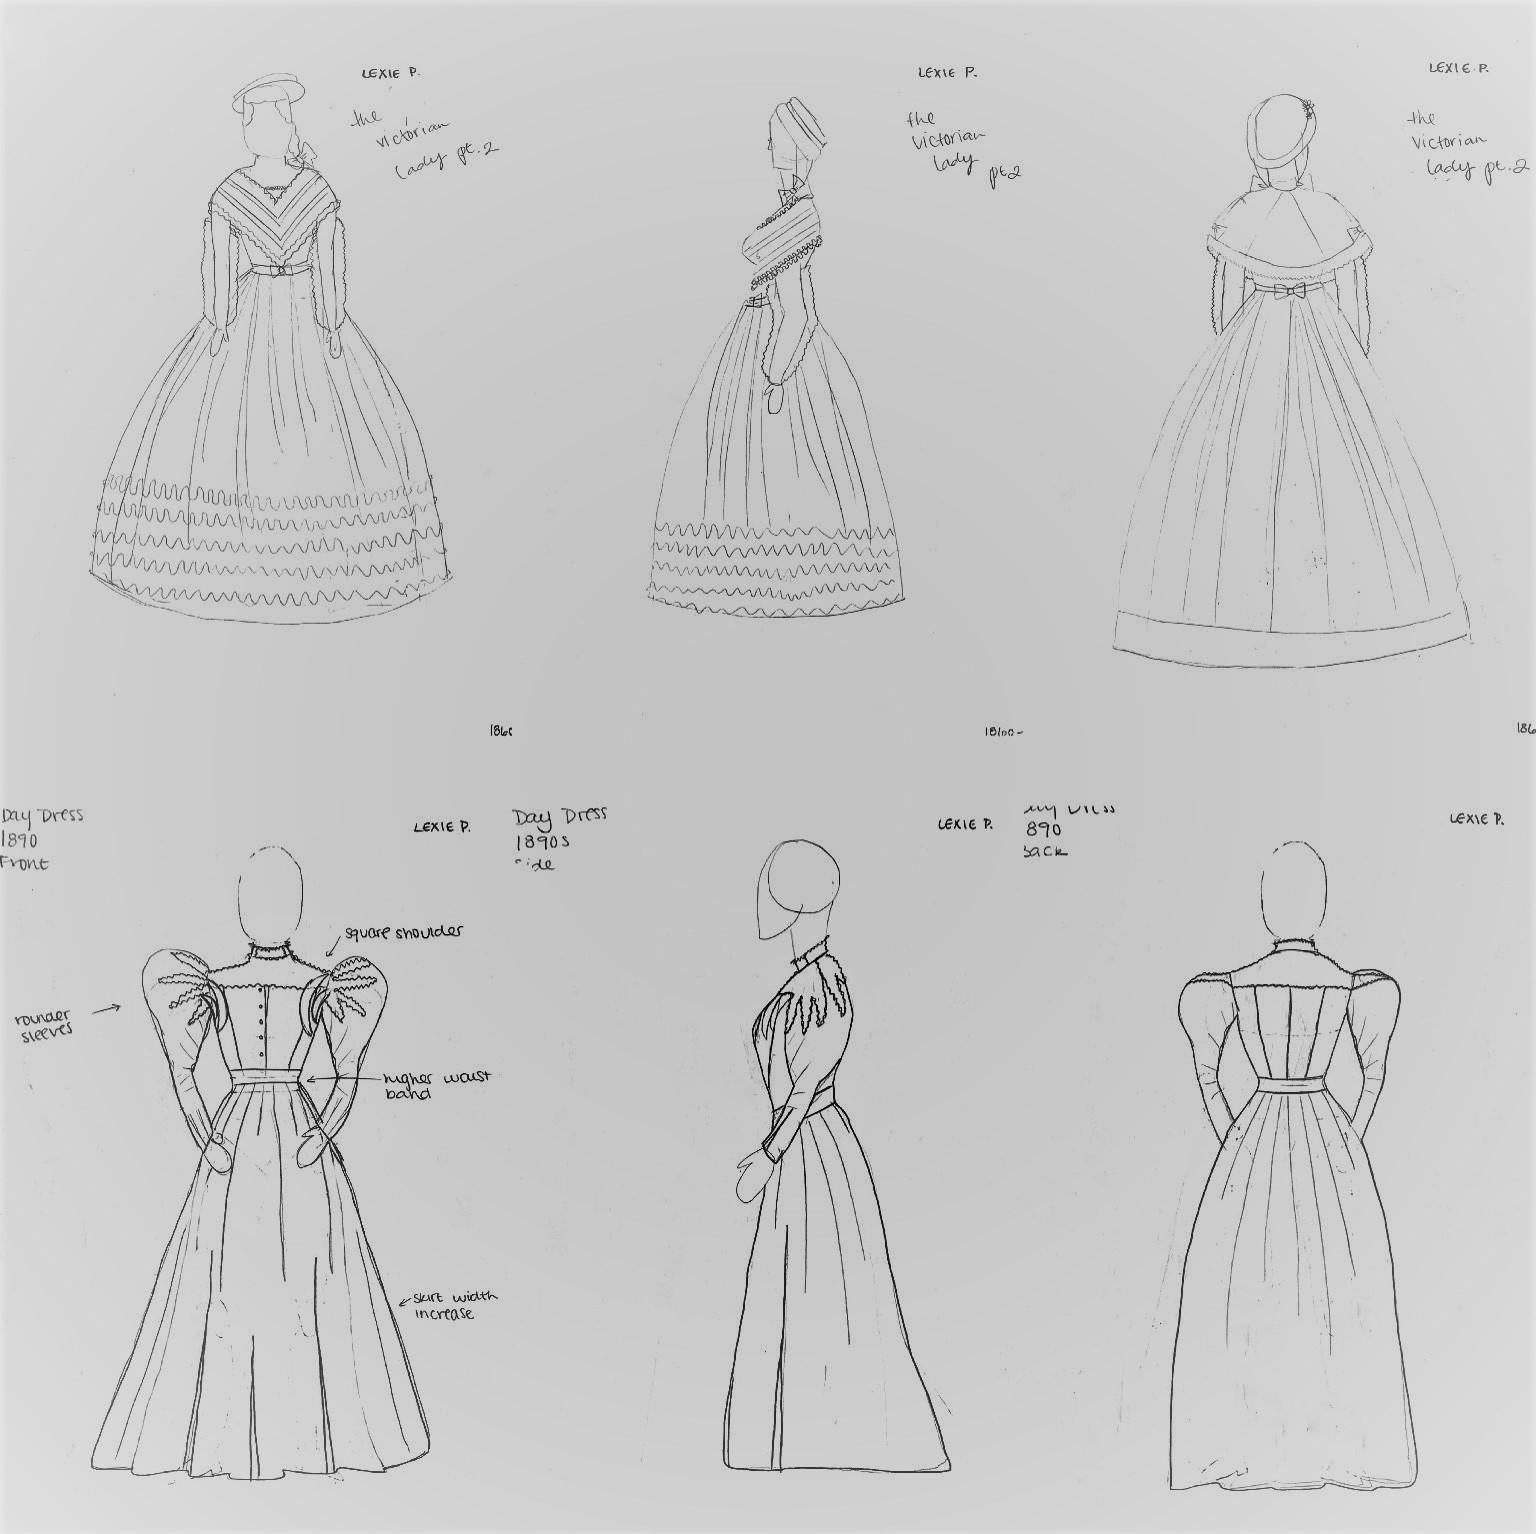 Exploring 19th Century Fashion Design